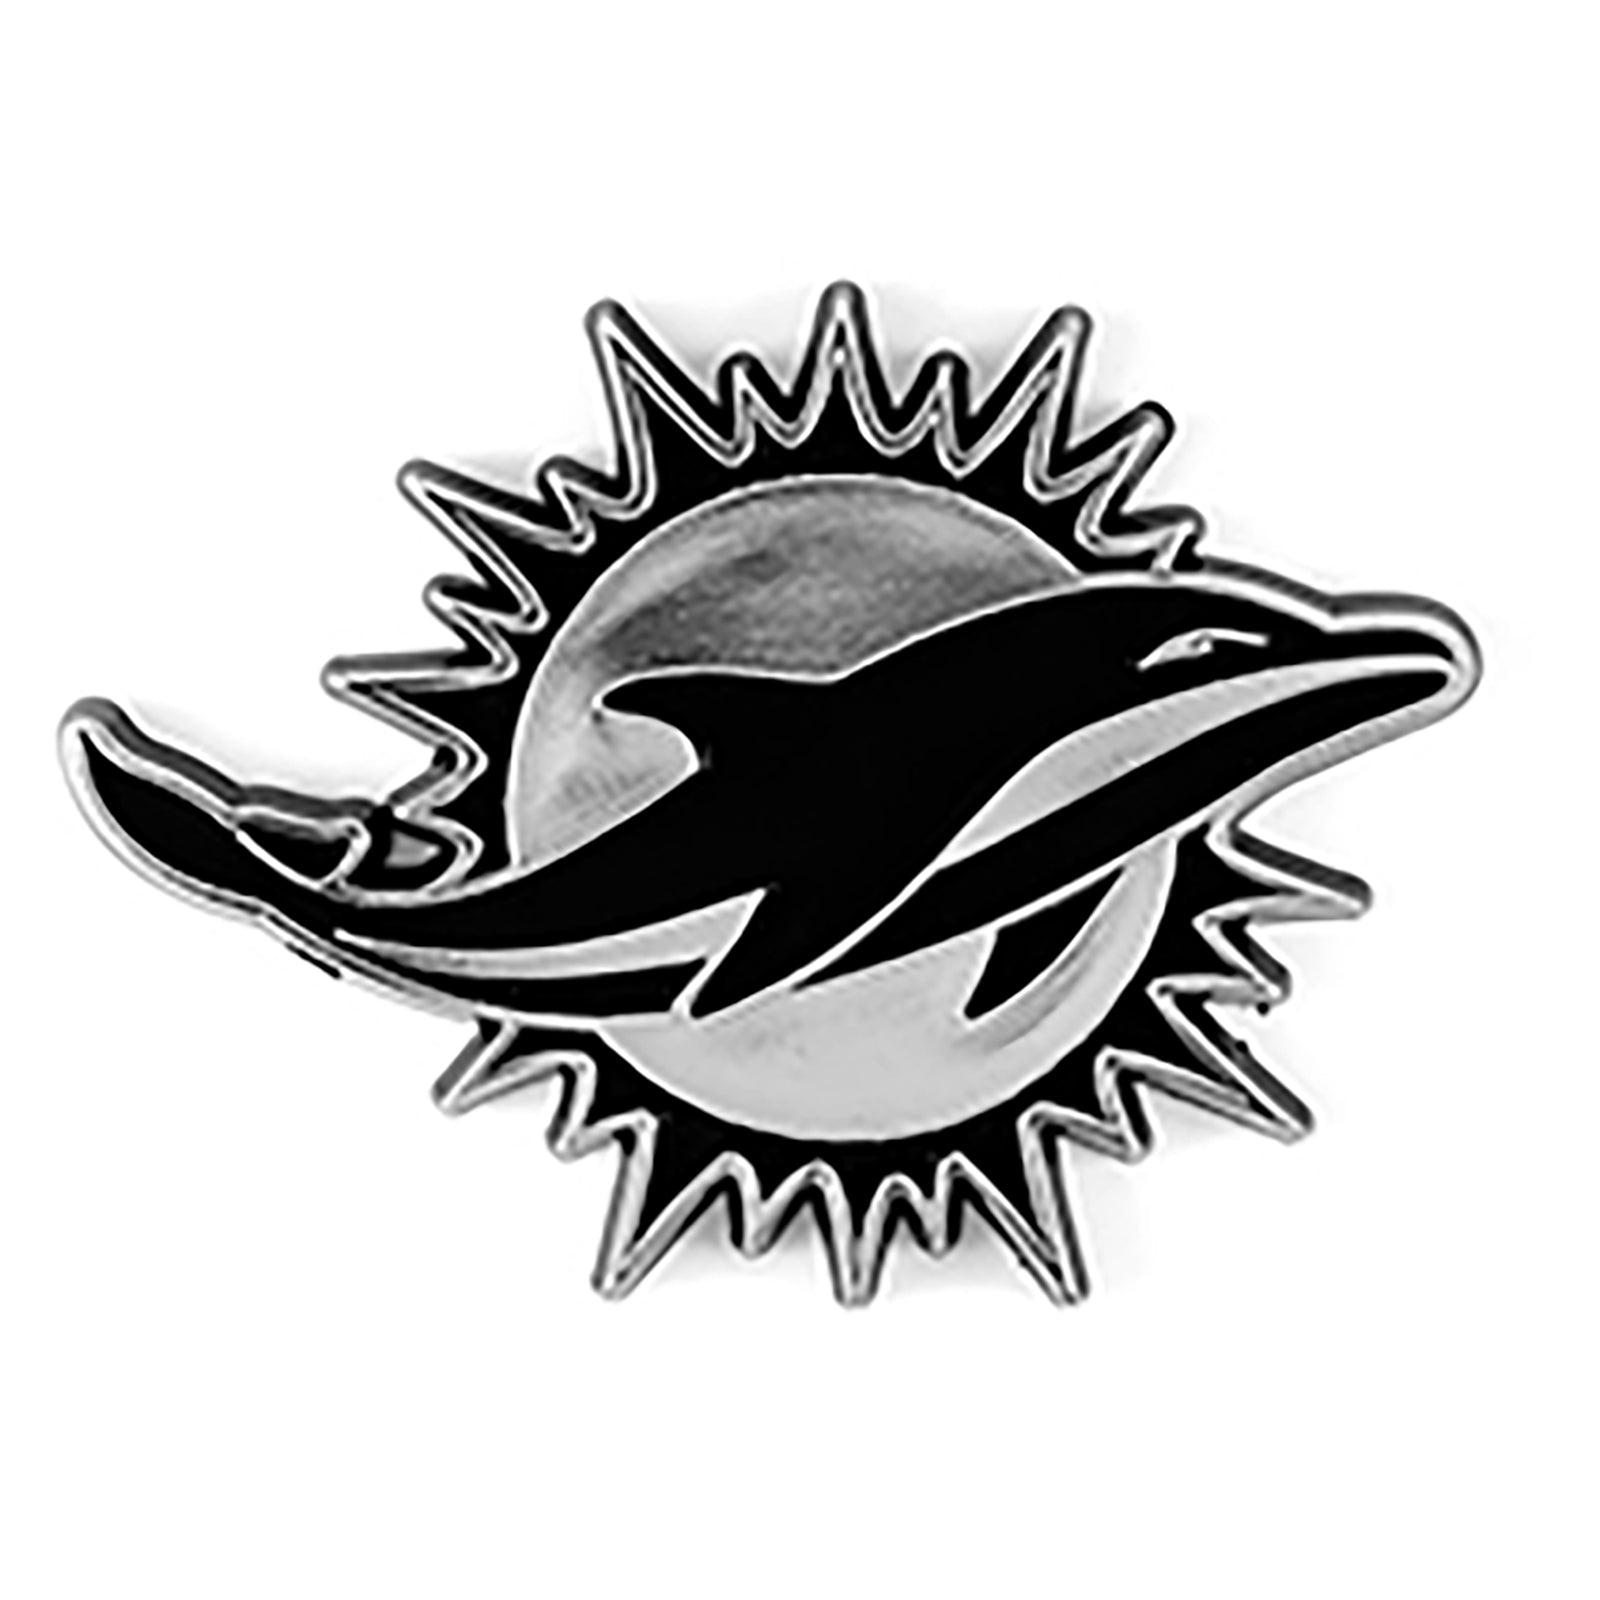 Miami Dolphins Premium Solid Metal Chrome Plated Car Auto Emblem 